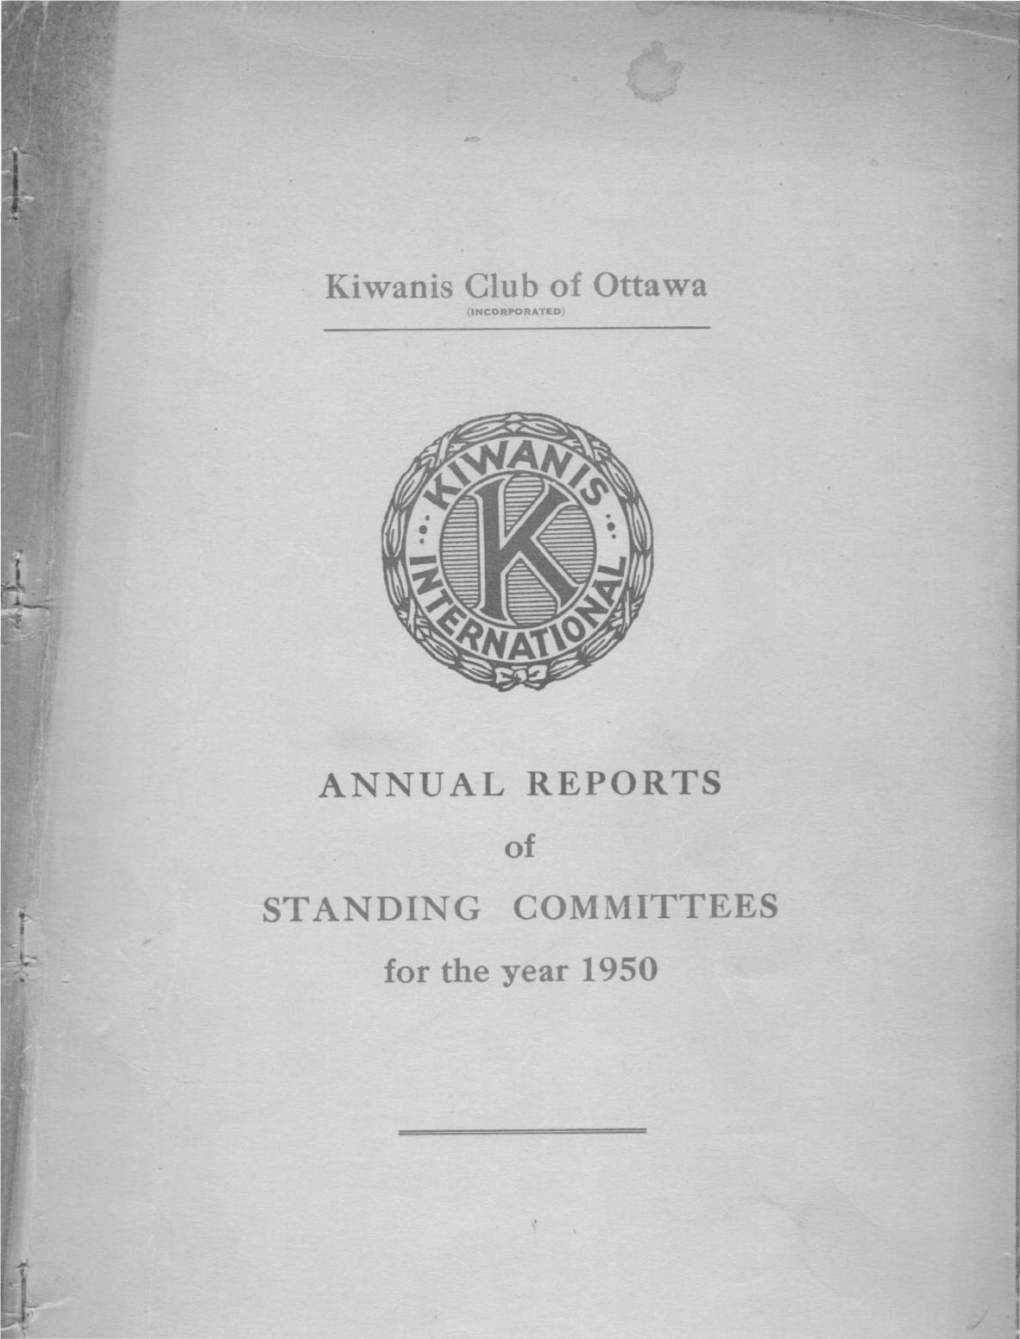 Kiwanis Club of Ottawa ANNUAL REPORTS of STANDING